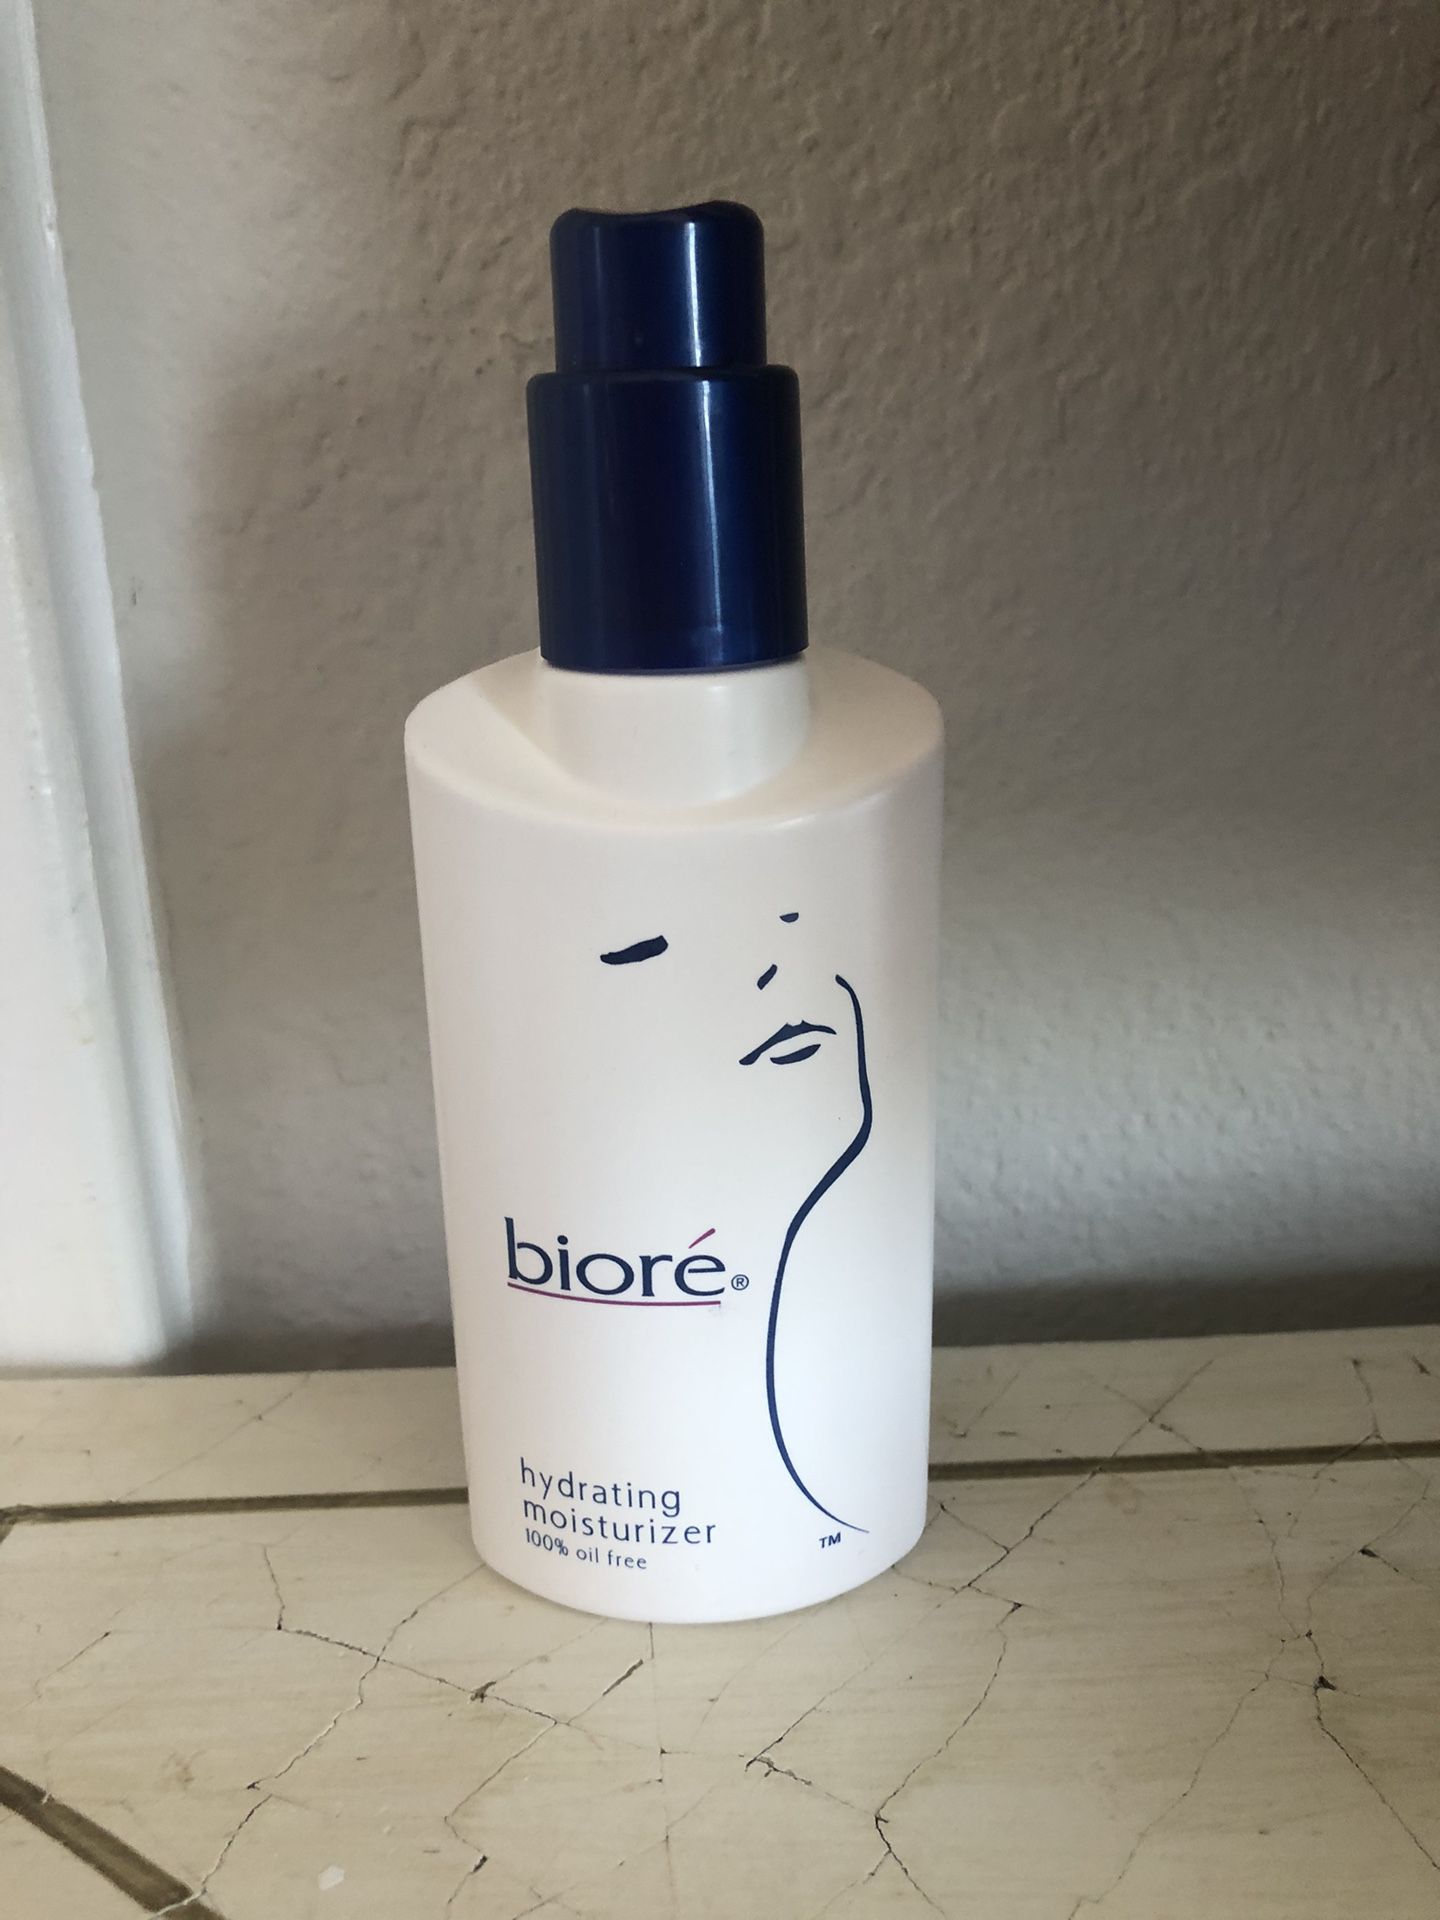 Biore’ Hydrating Moisturizer 100% Oil Free 4 fl oz - New Without Box